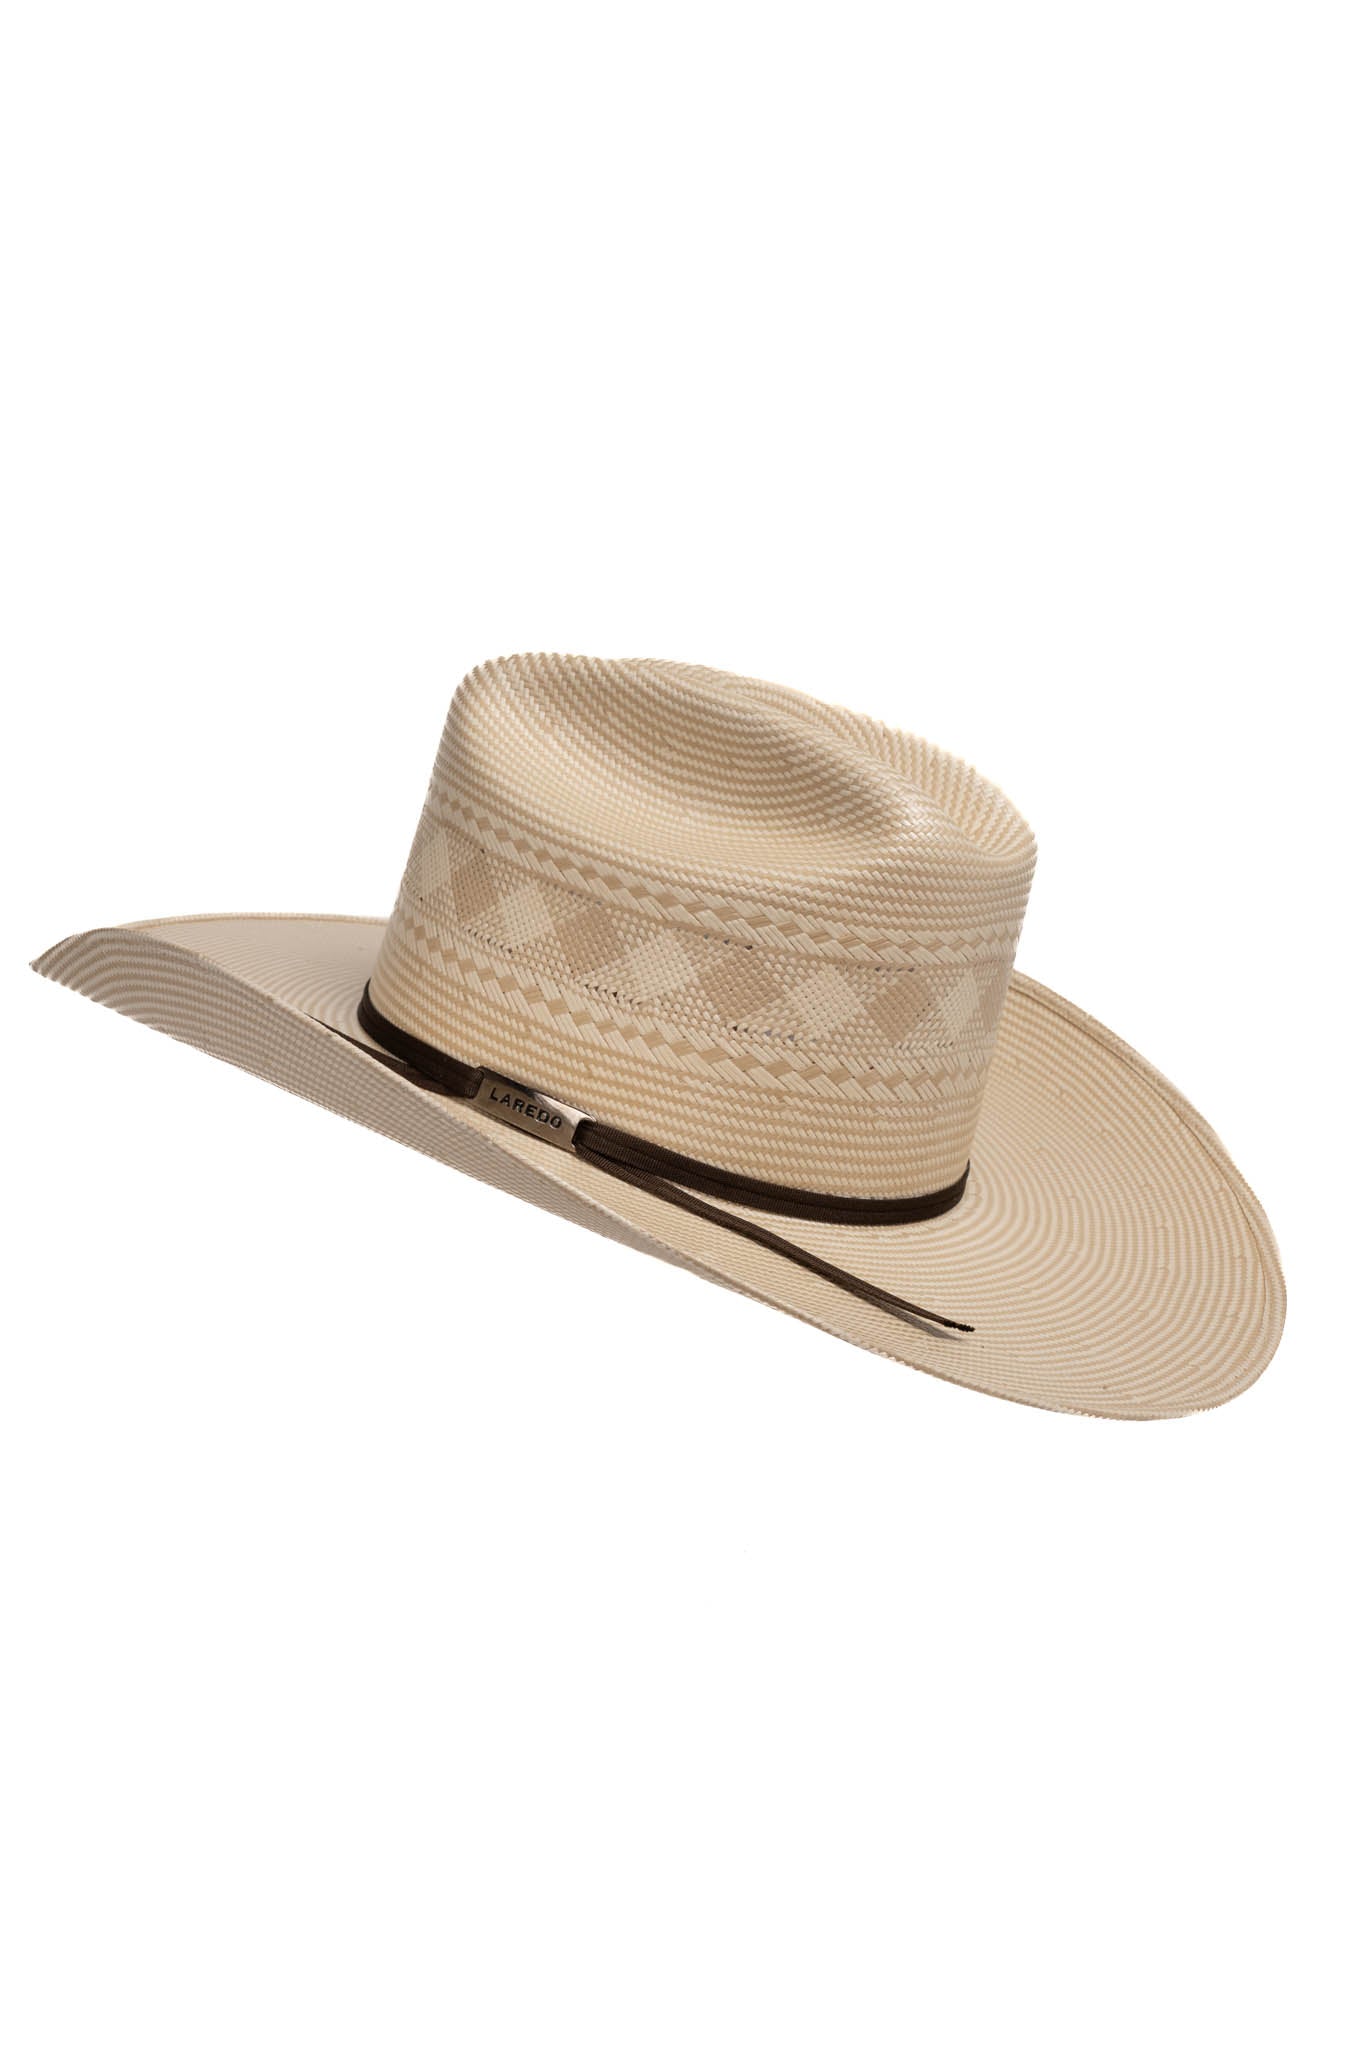 Huntsville Laredo Minnick 200X Straw Hat